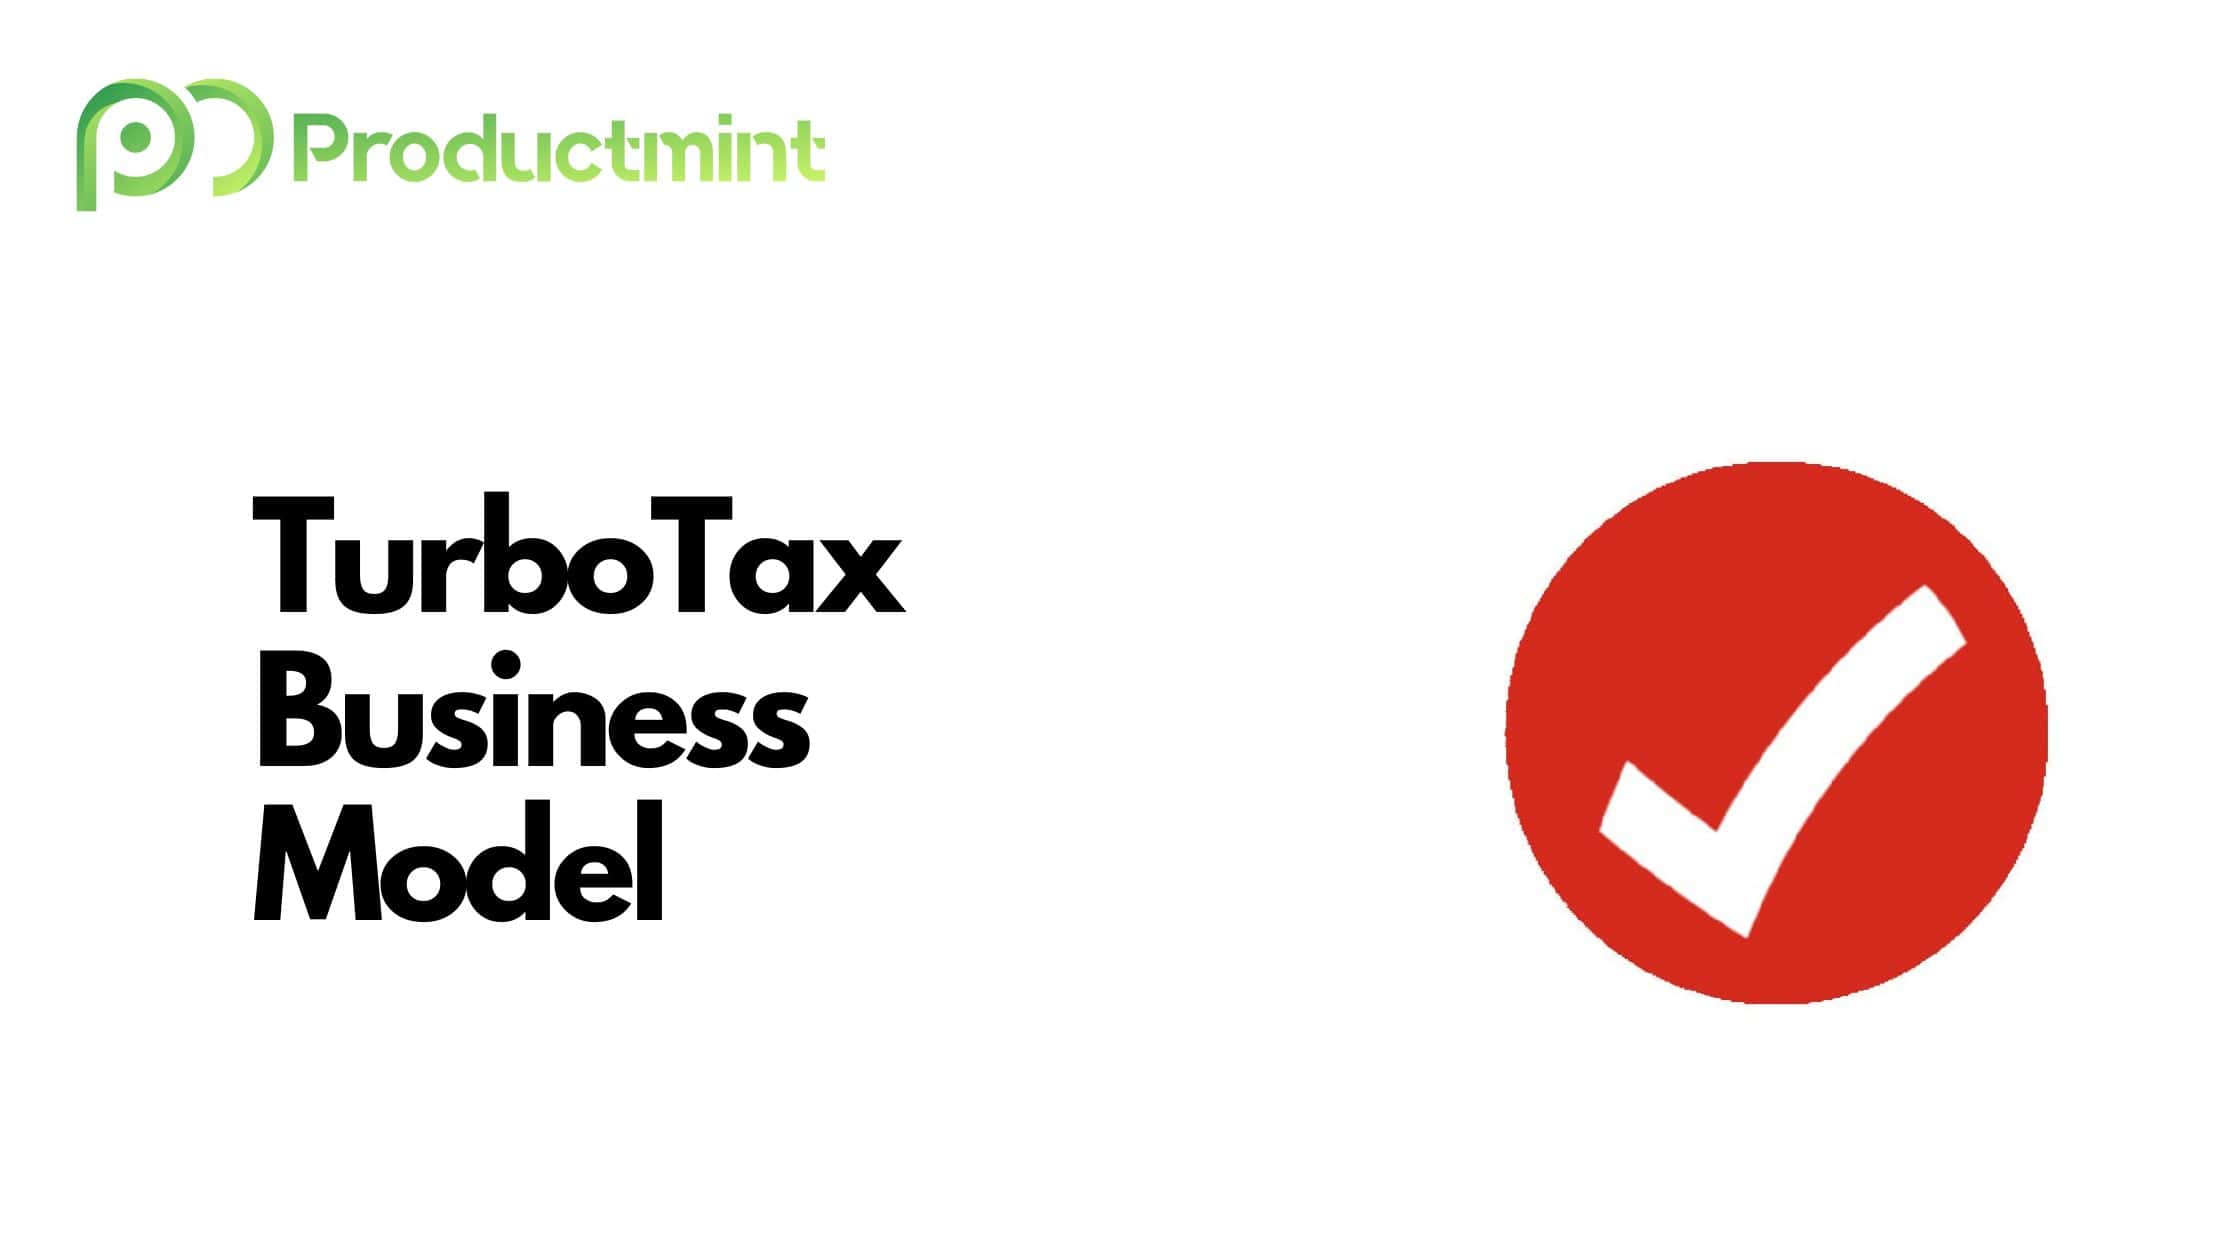 TurboTax Business Model